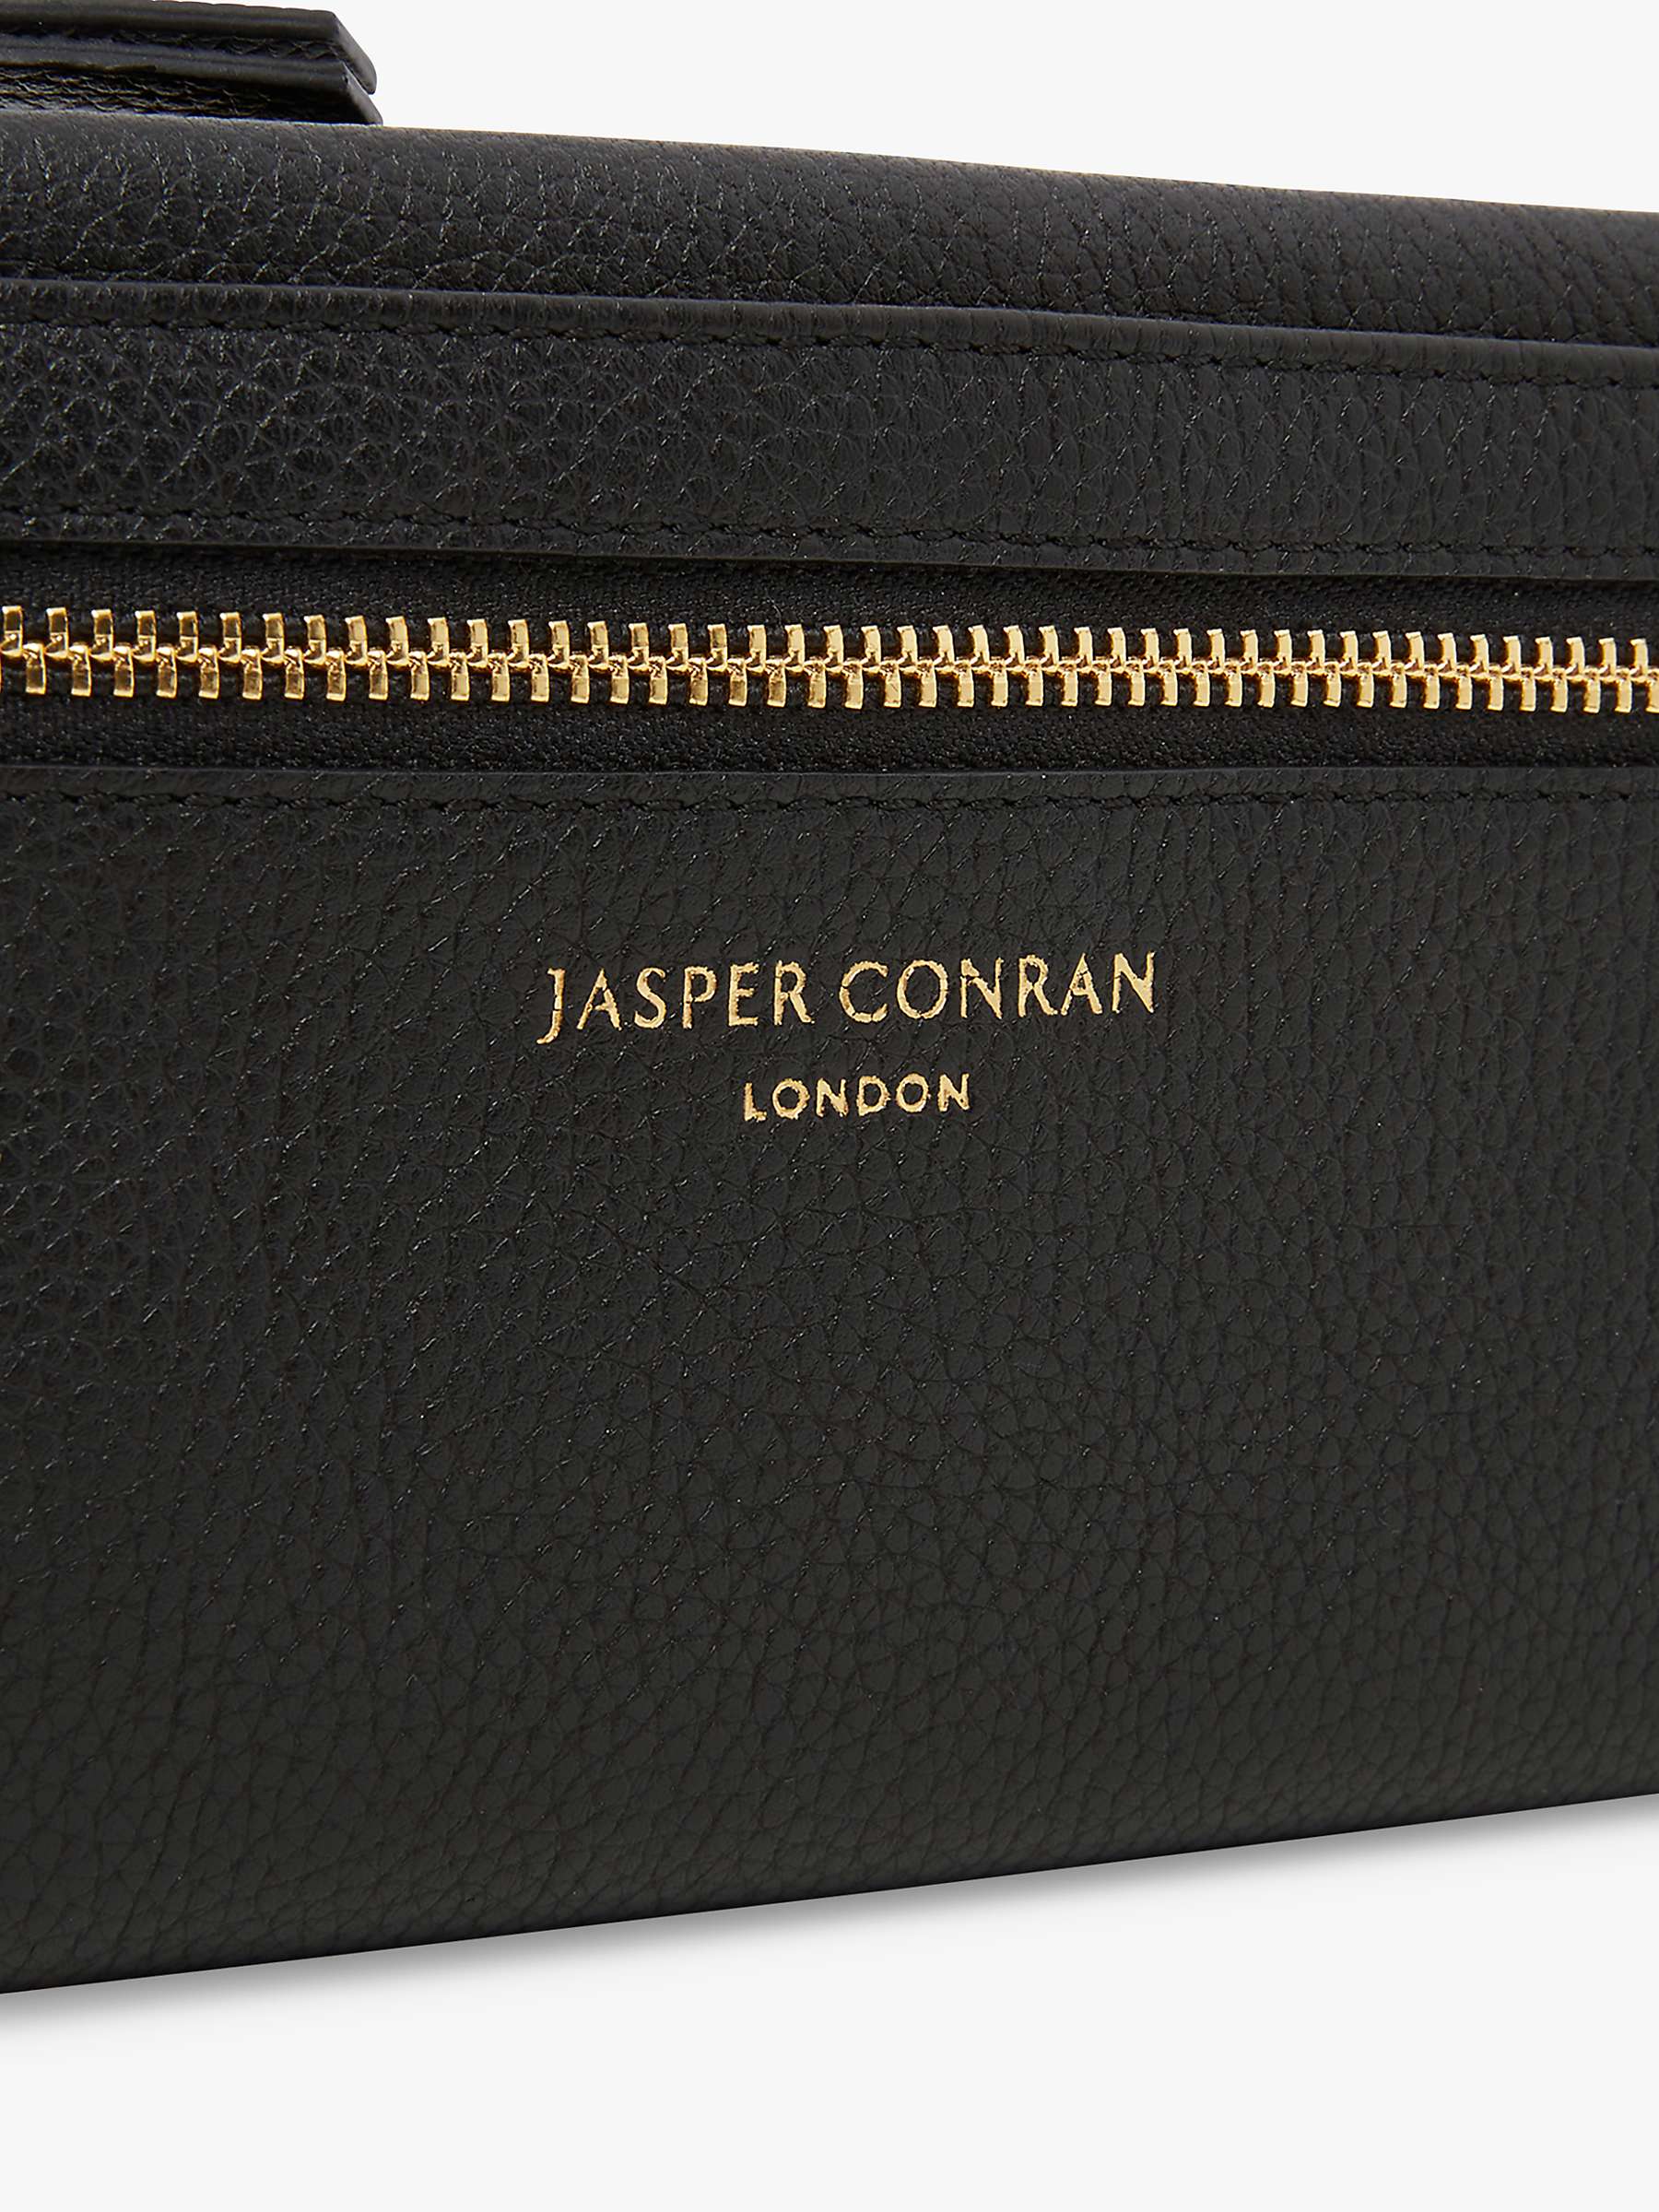 Buy Jasper Conran London Darcey Large Leather Purse, Black Online at johnlewis.com